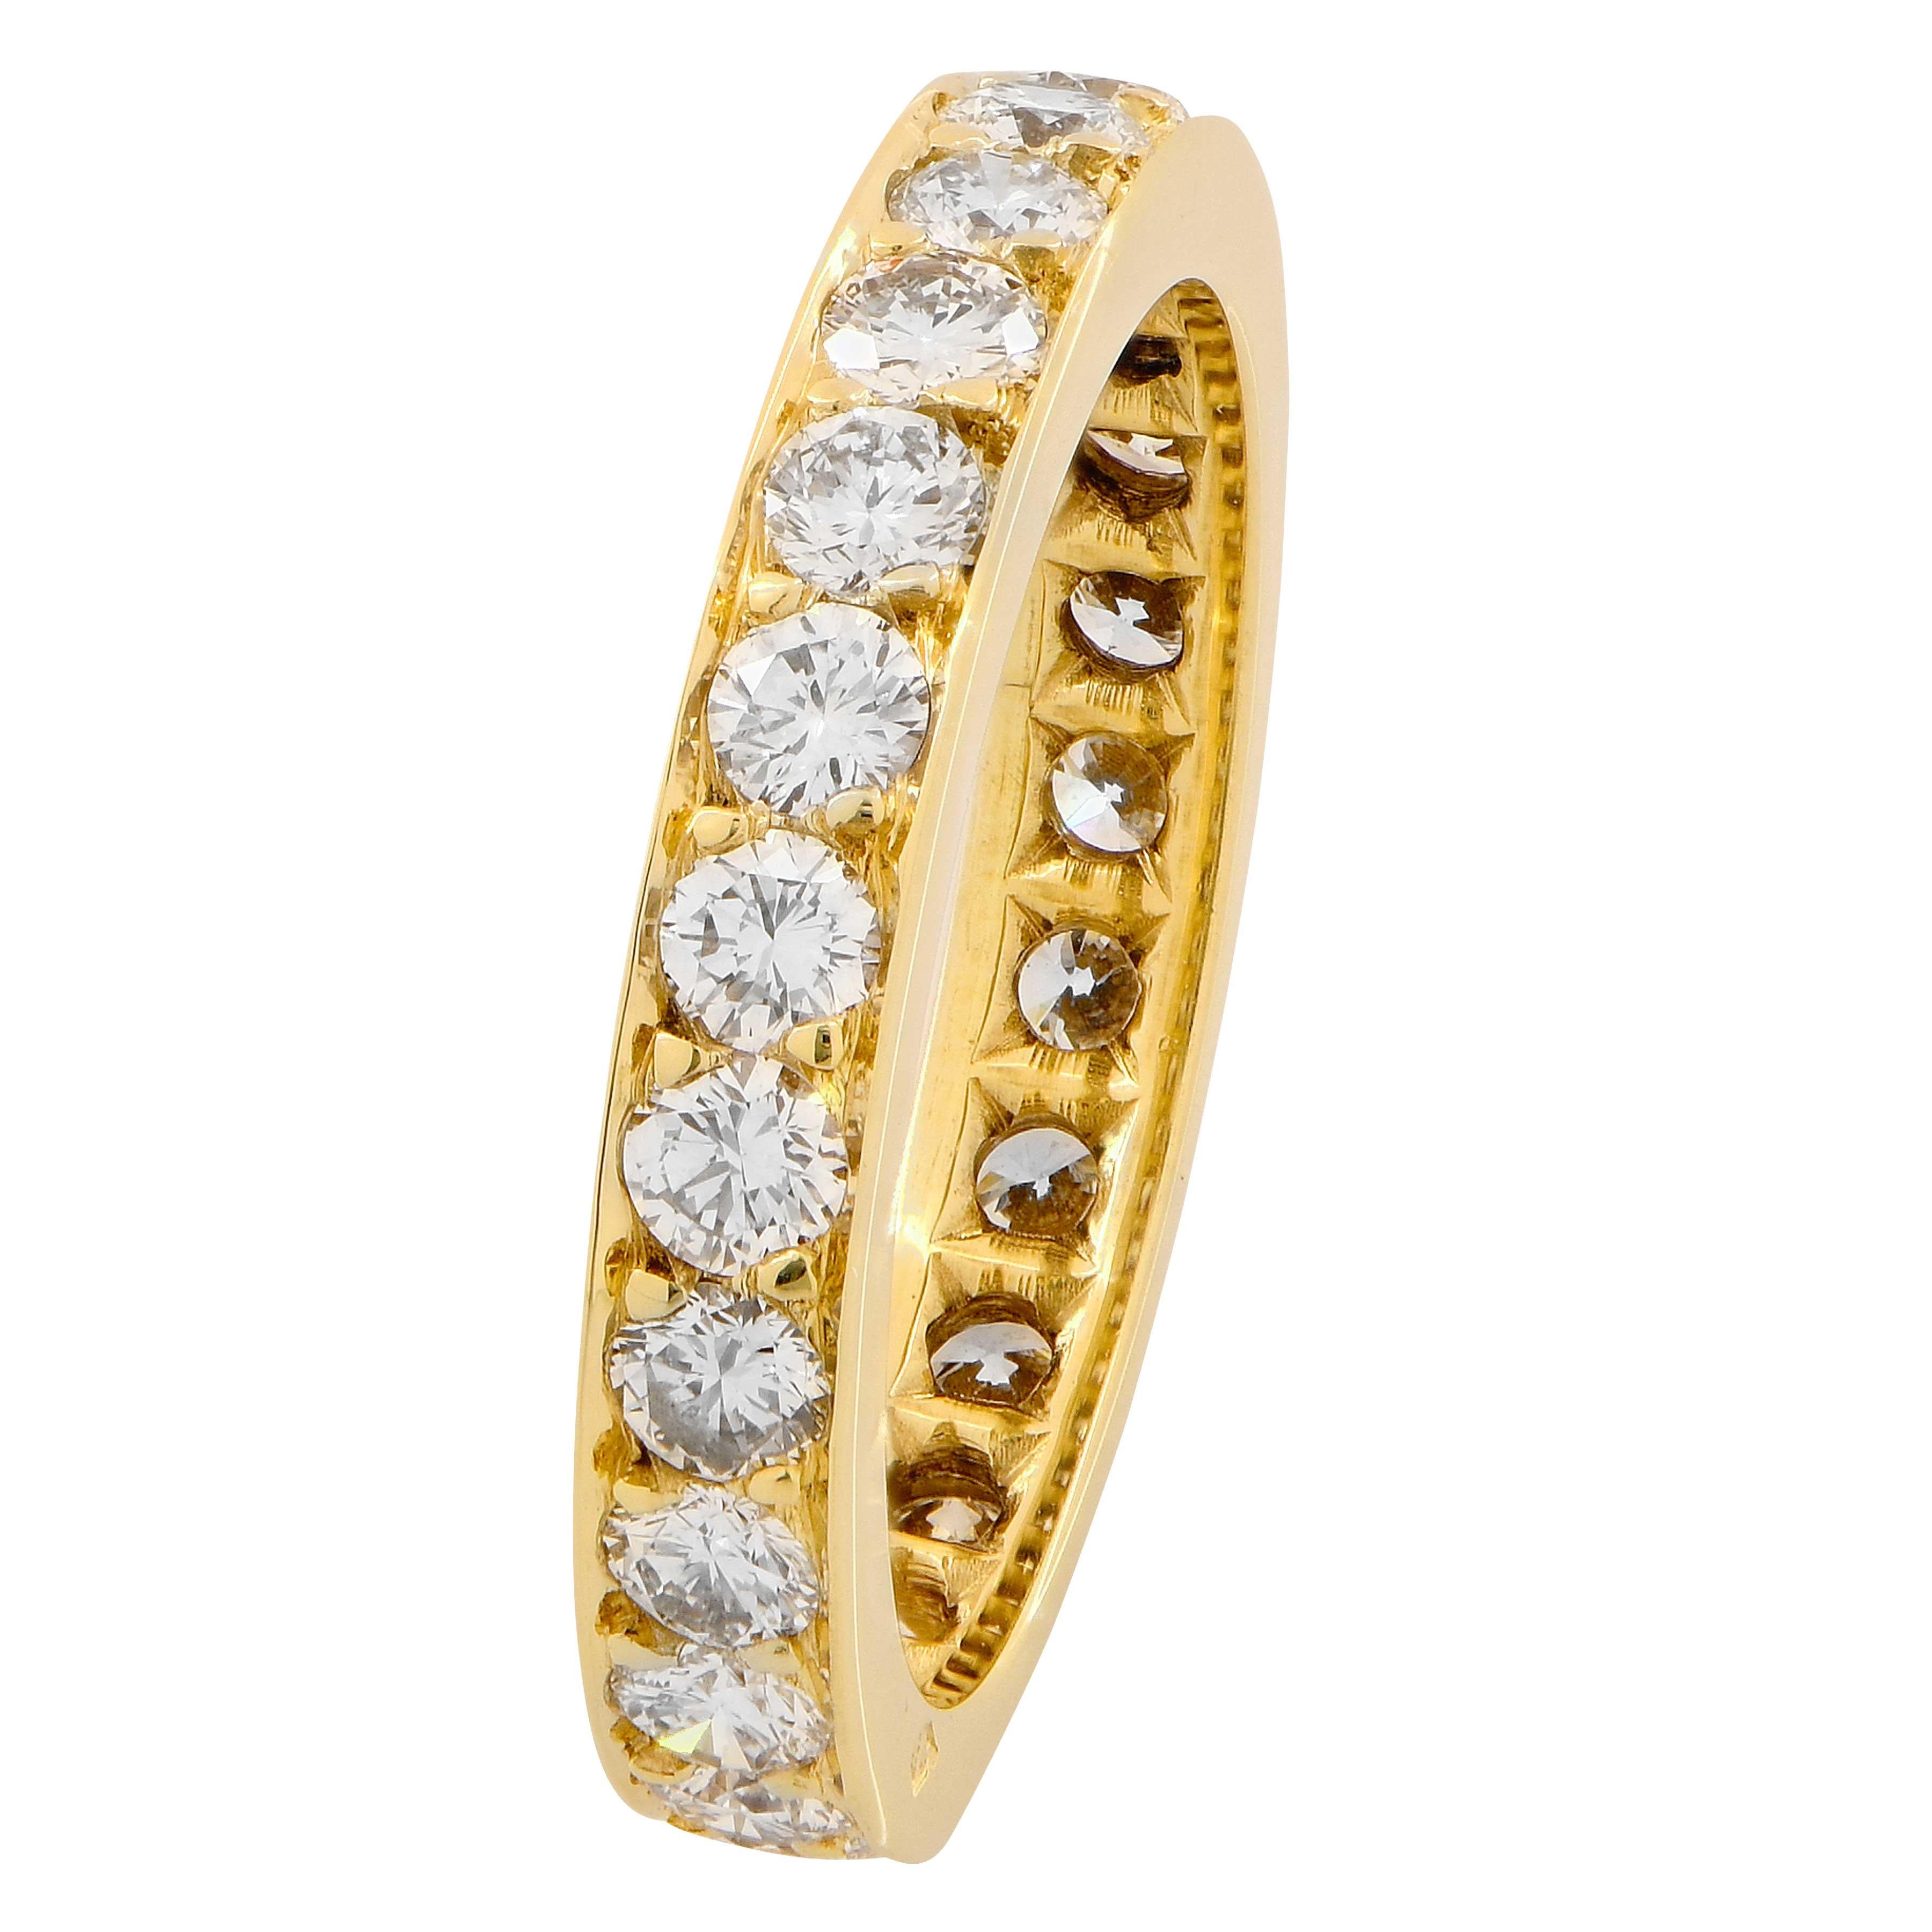 18 carat gold eternity ring